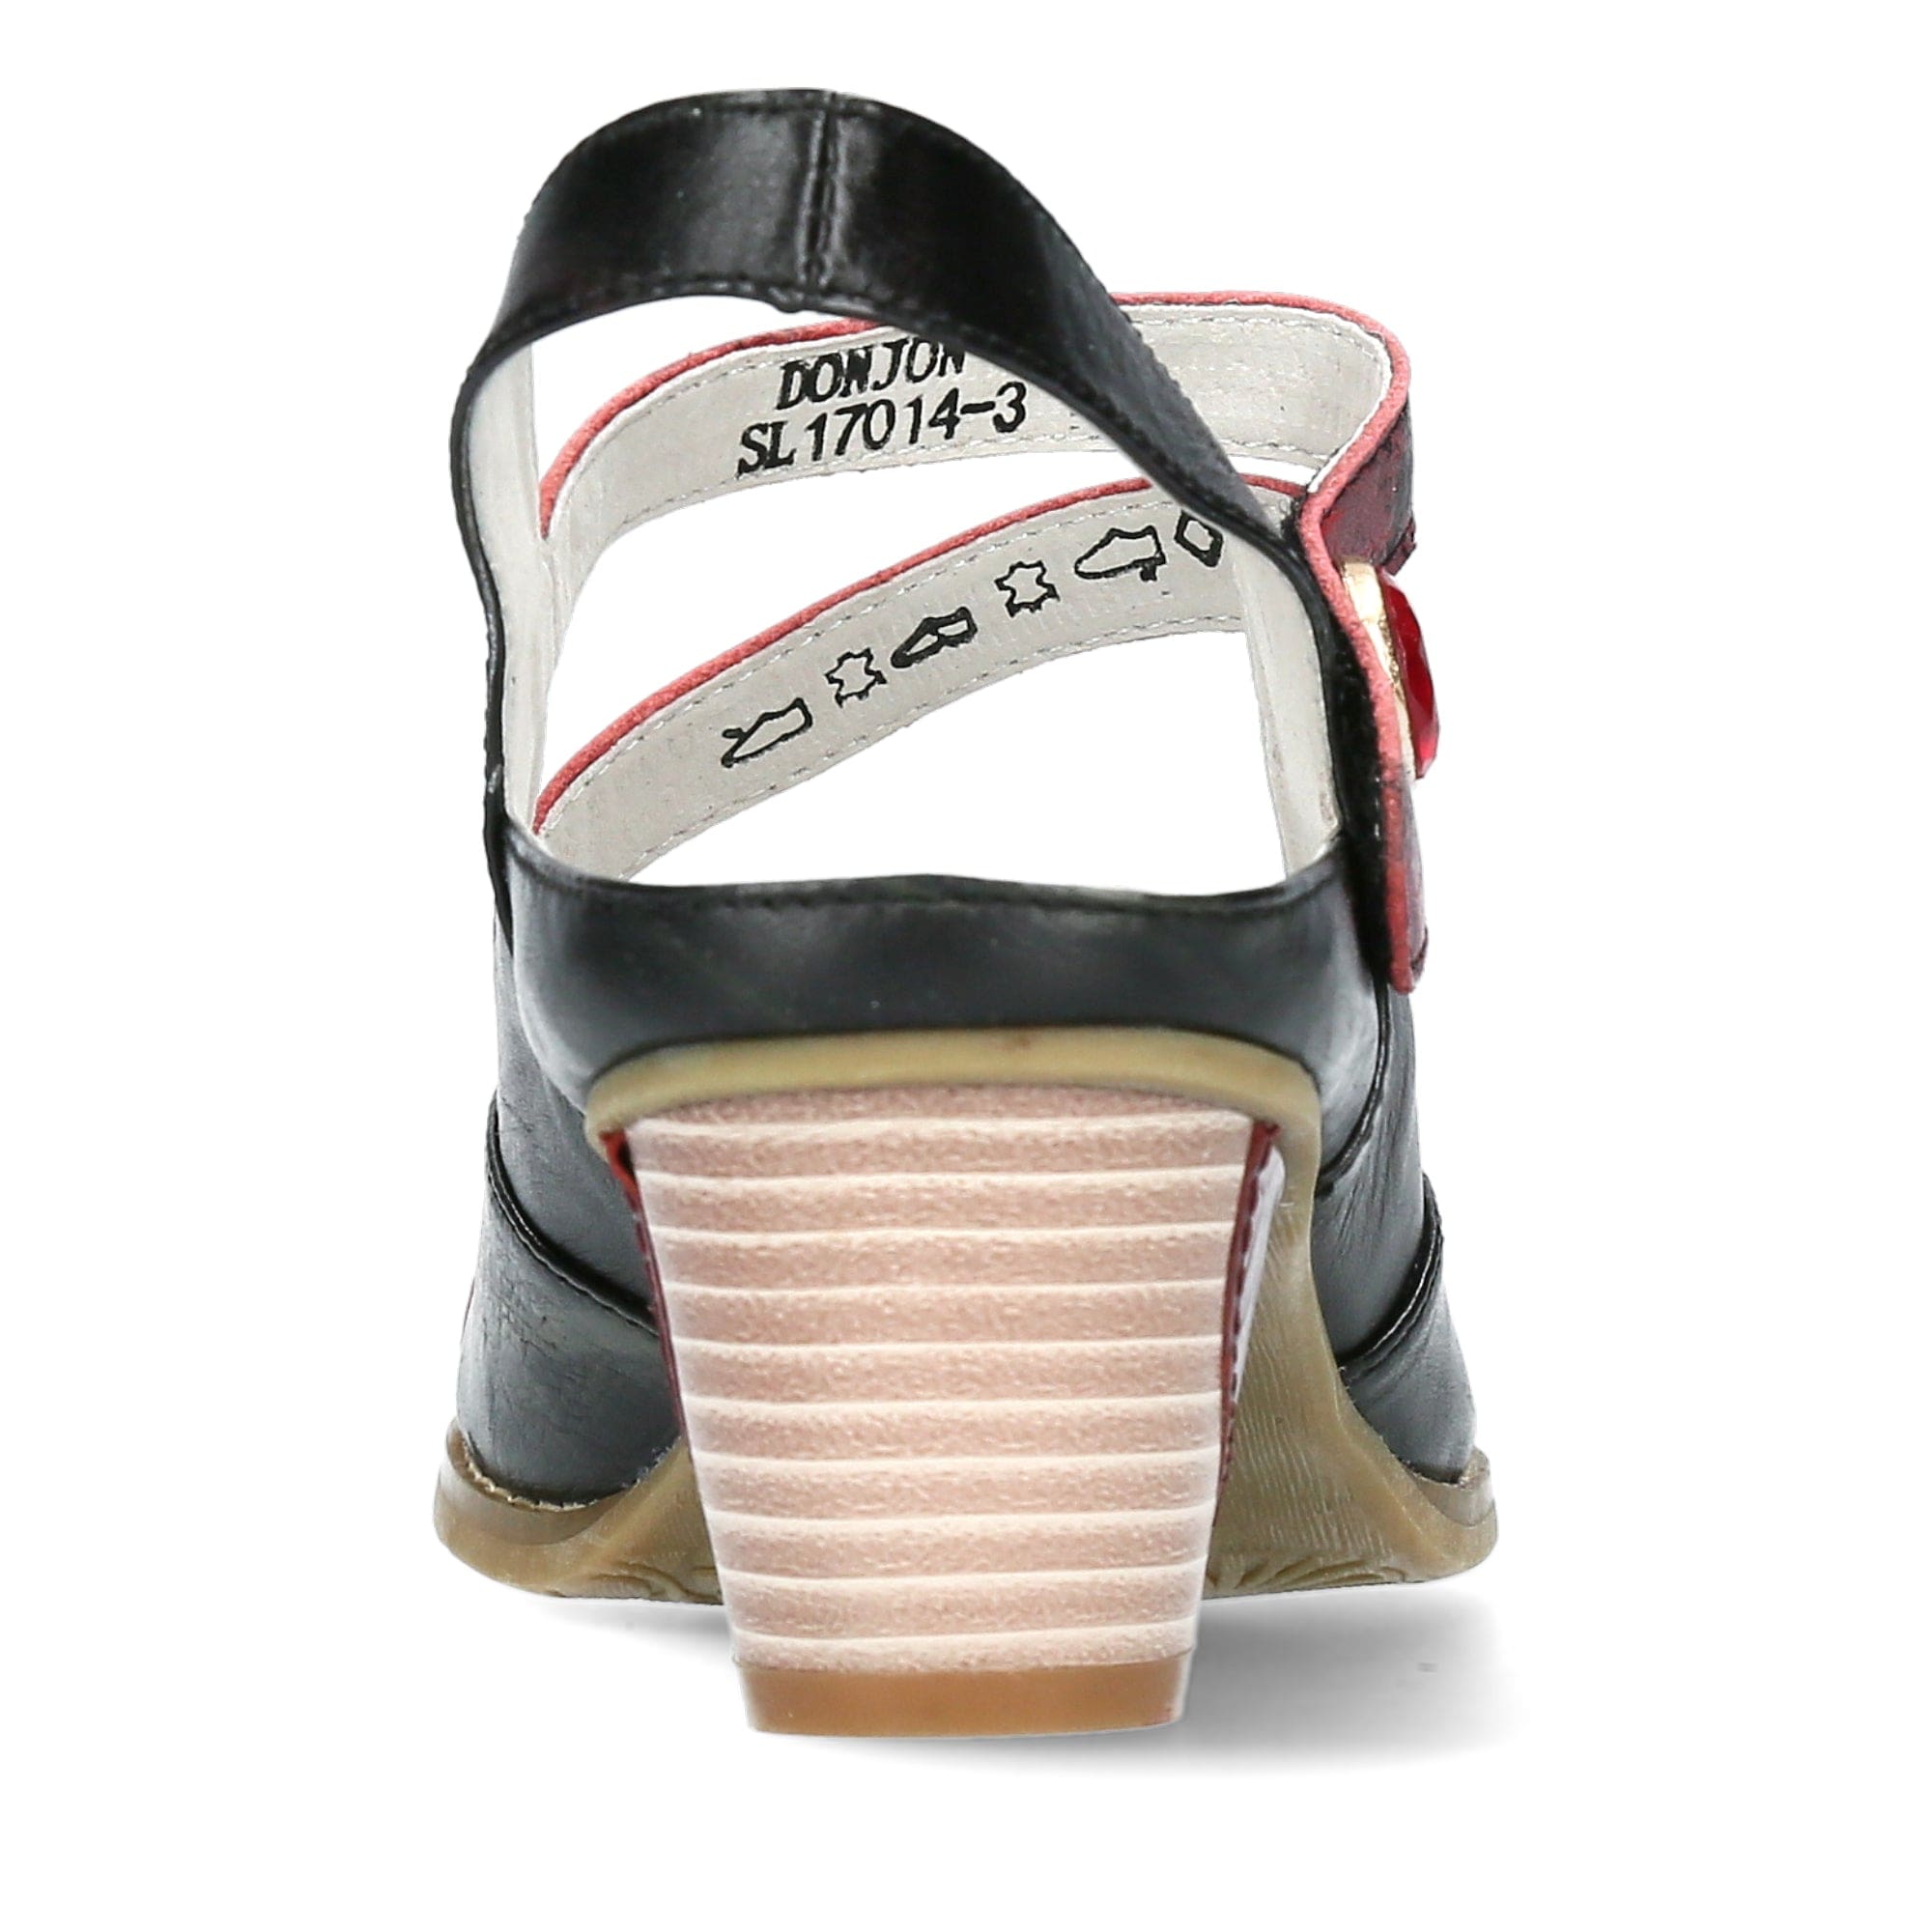 DONJON 03 - Sandalo